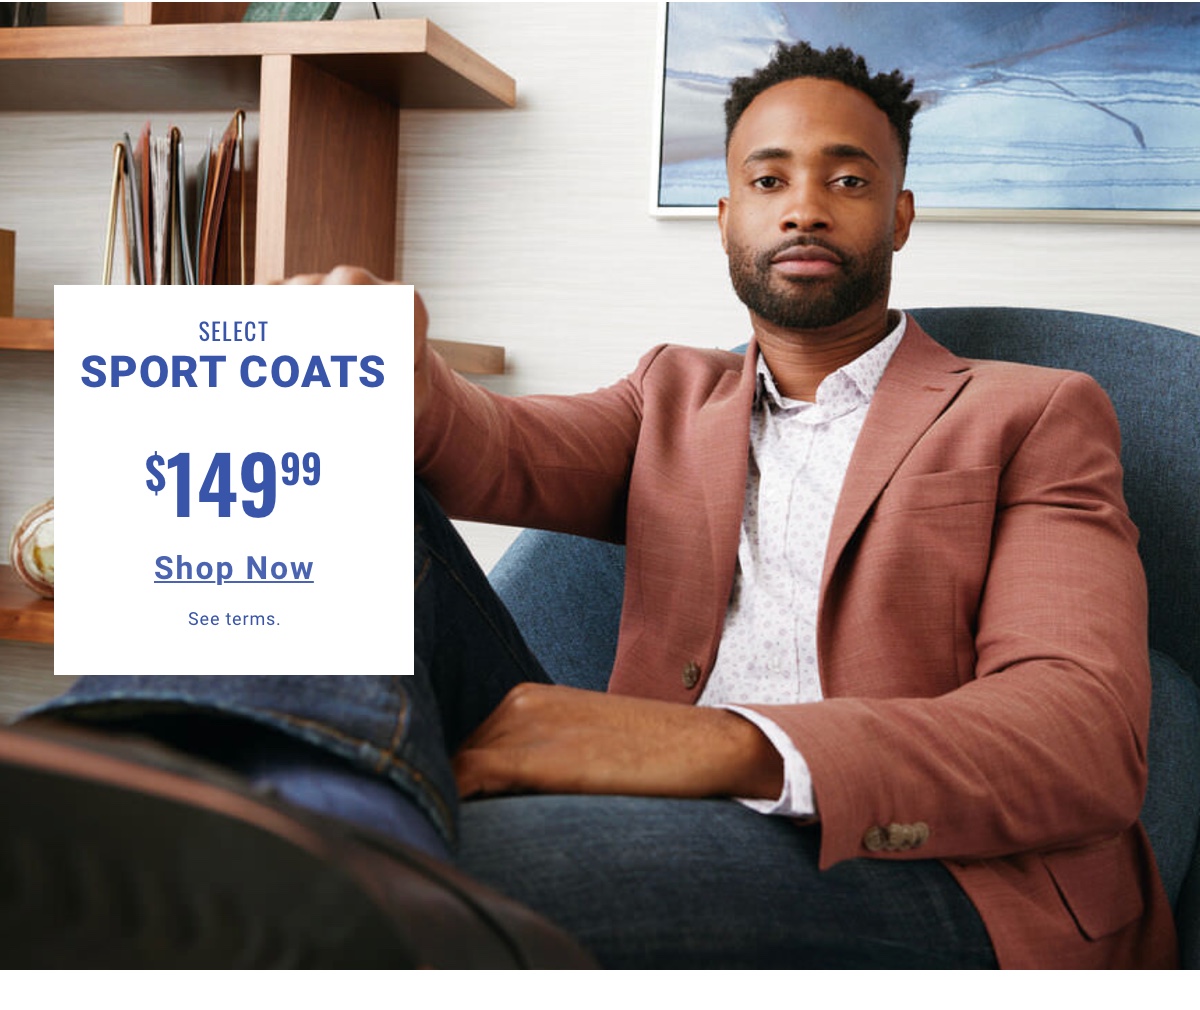 Select Sport Coats $149.99